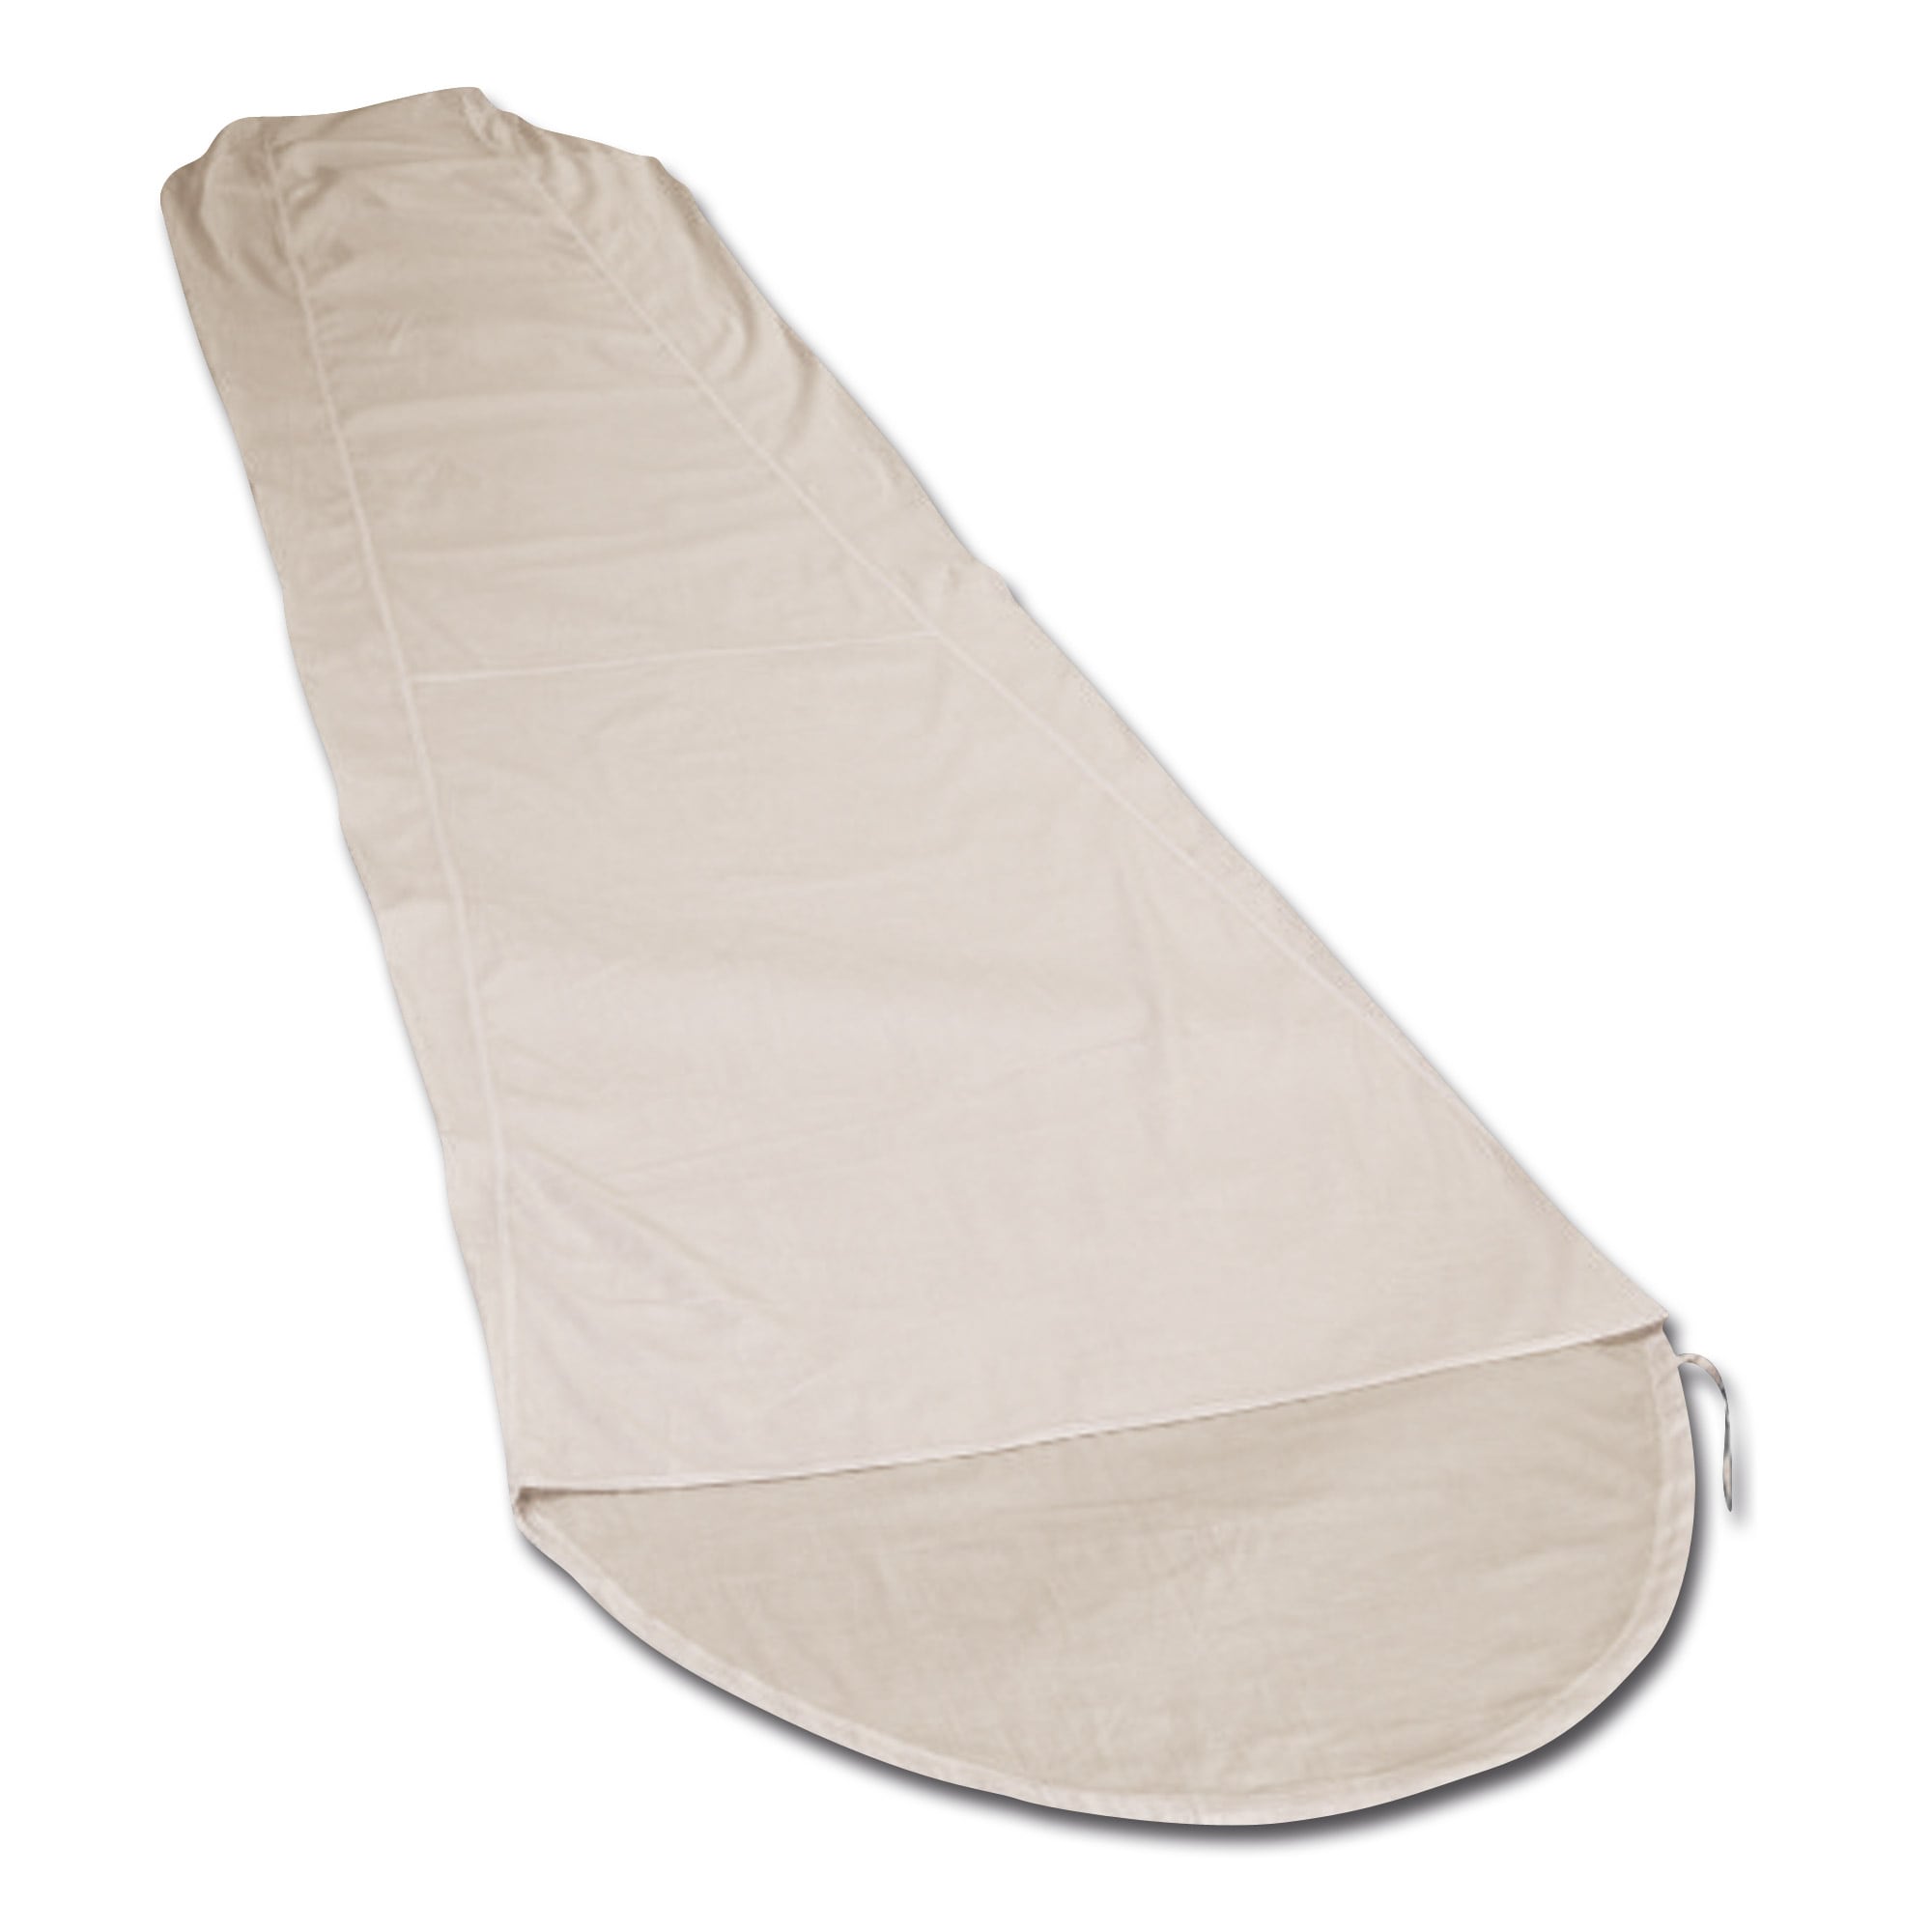 Cotton Sleeping Bag Liner Mummy Shape Cotton Sleeping Bag Liner Mummy Shape Liners Sleeping Bags Sleeping Camping